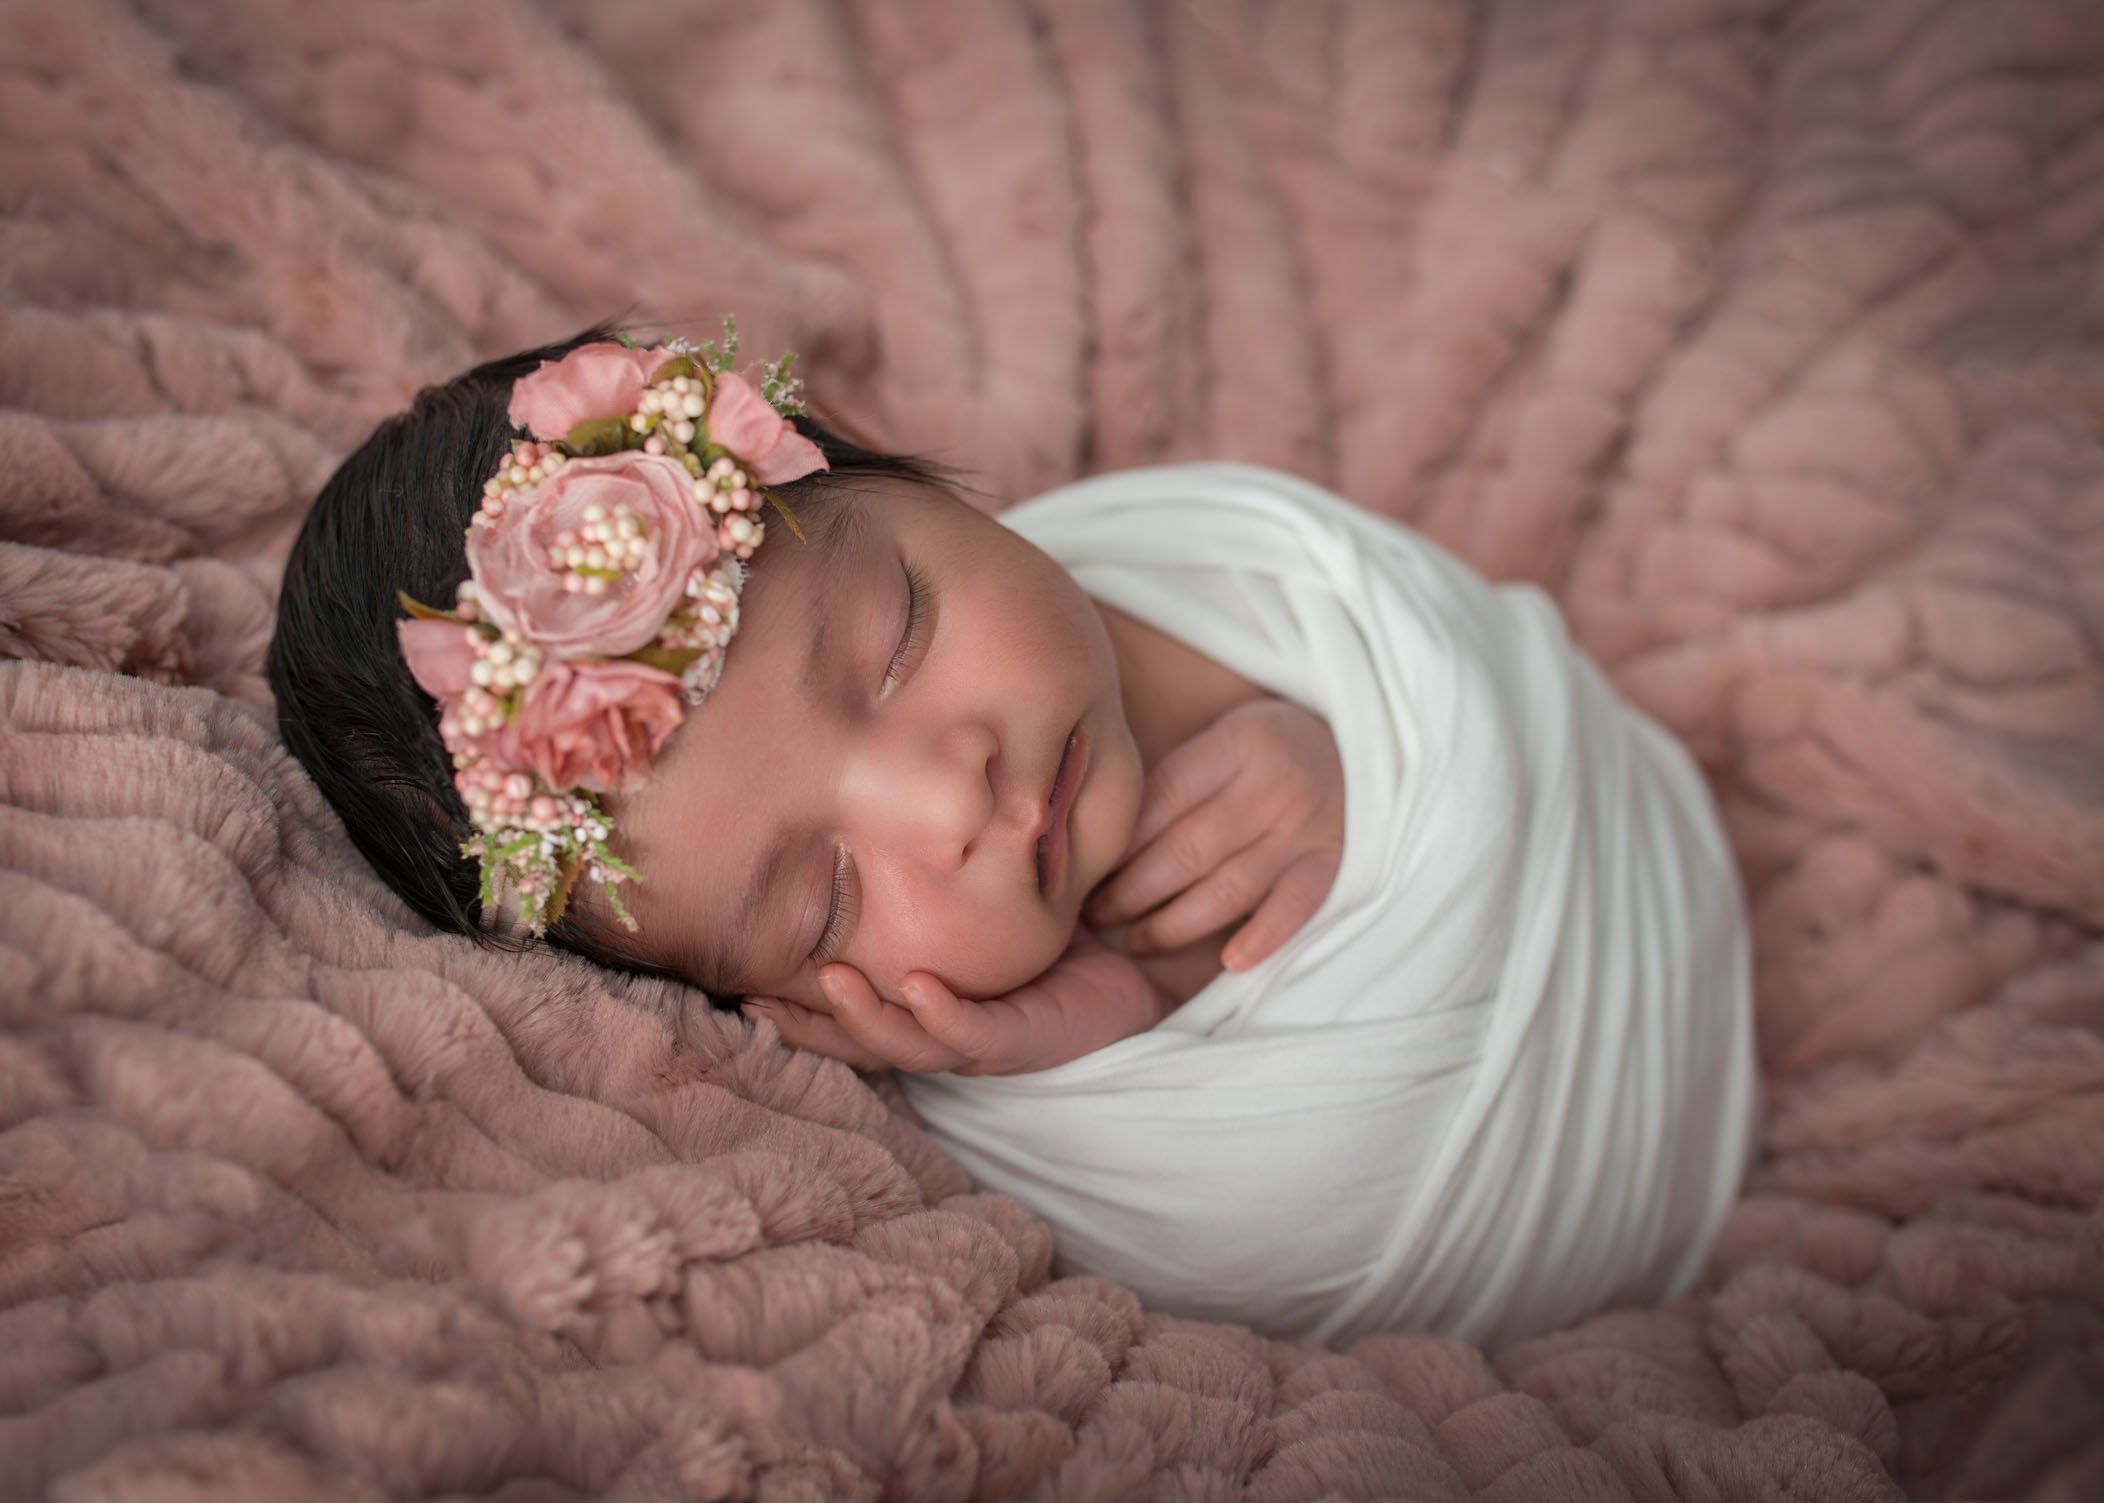 newborn baby sleeping on pink blanket with floral crown on head